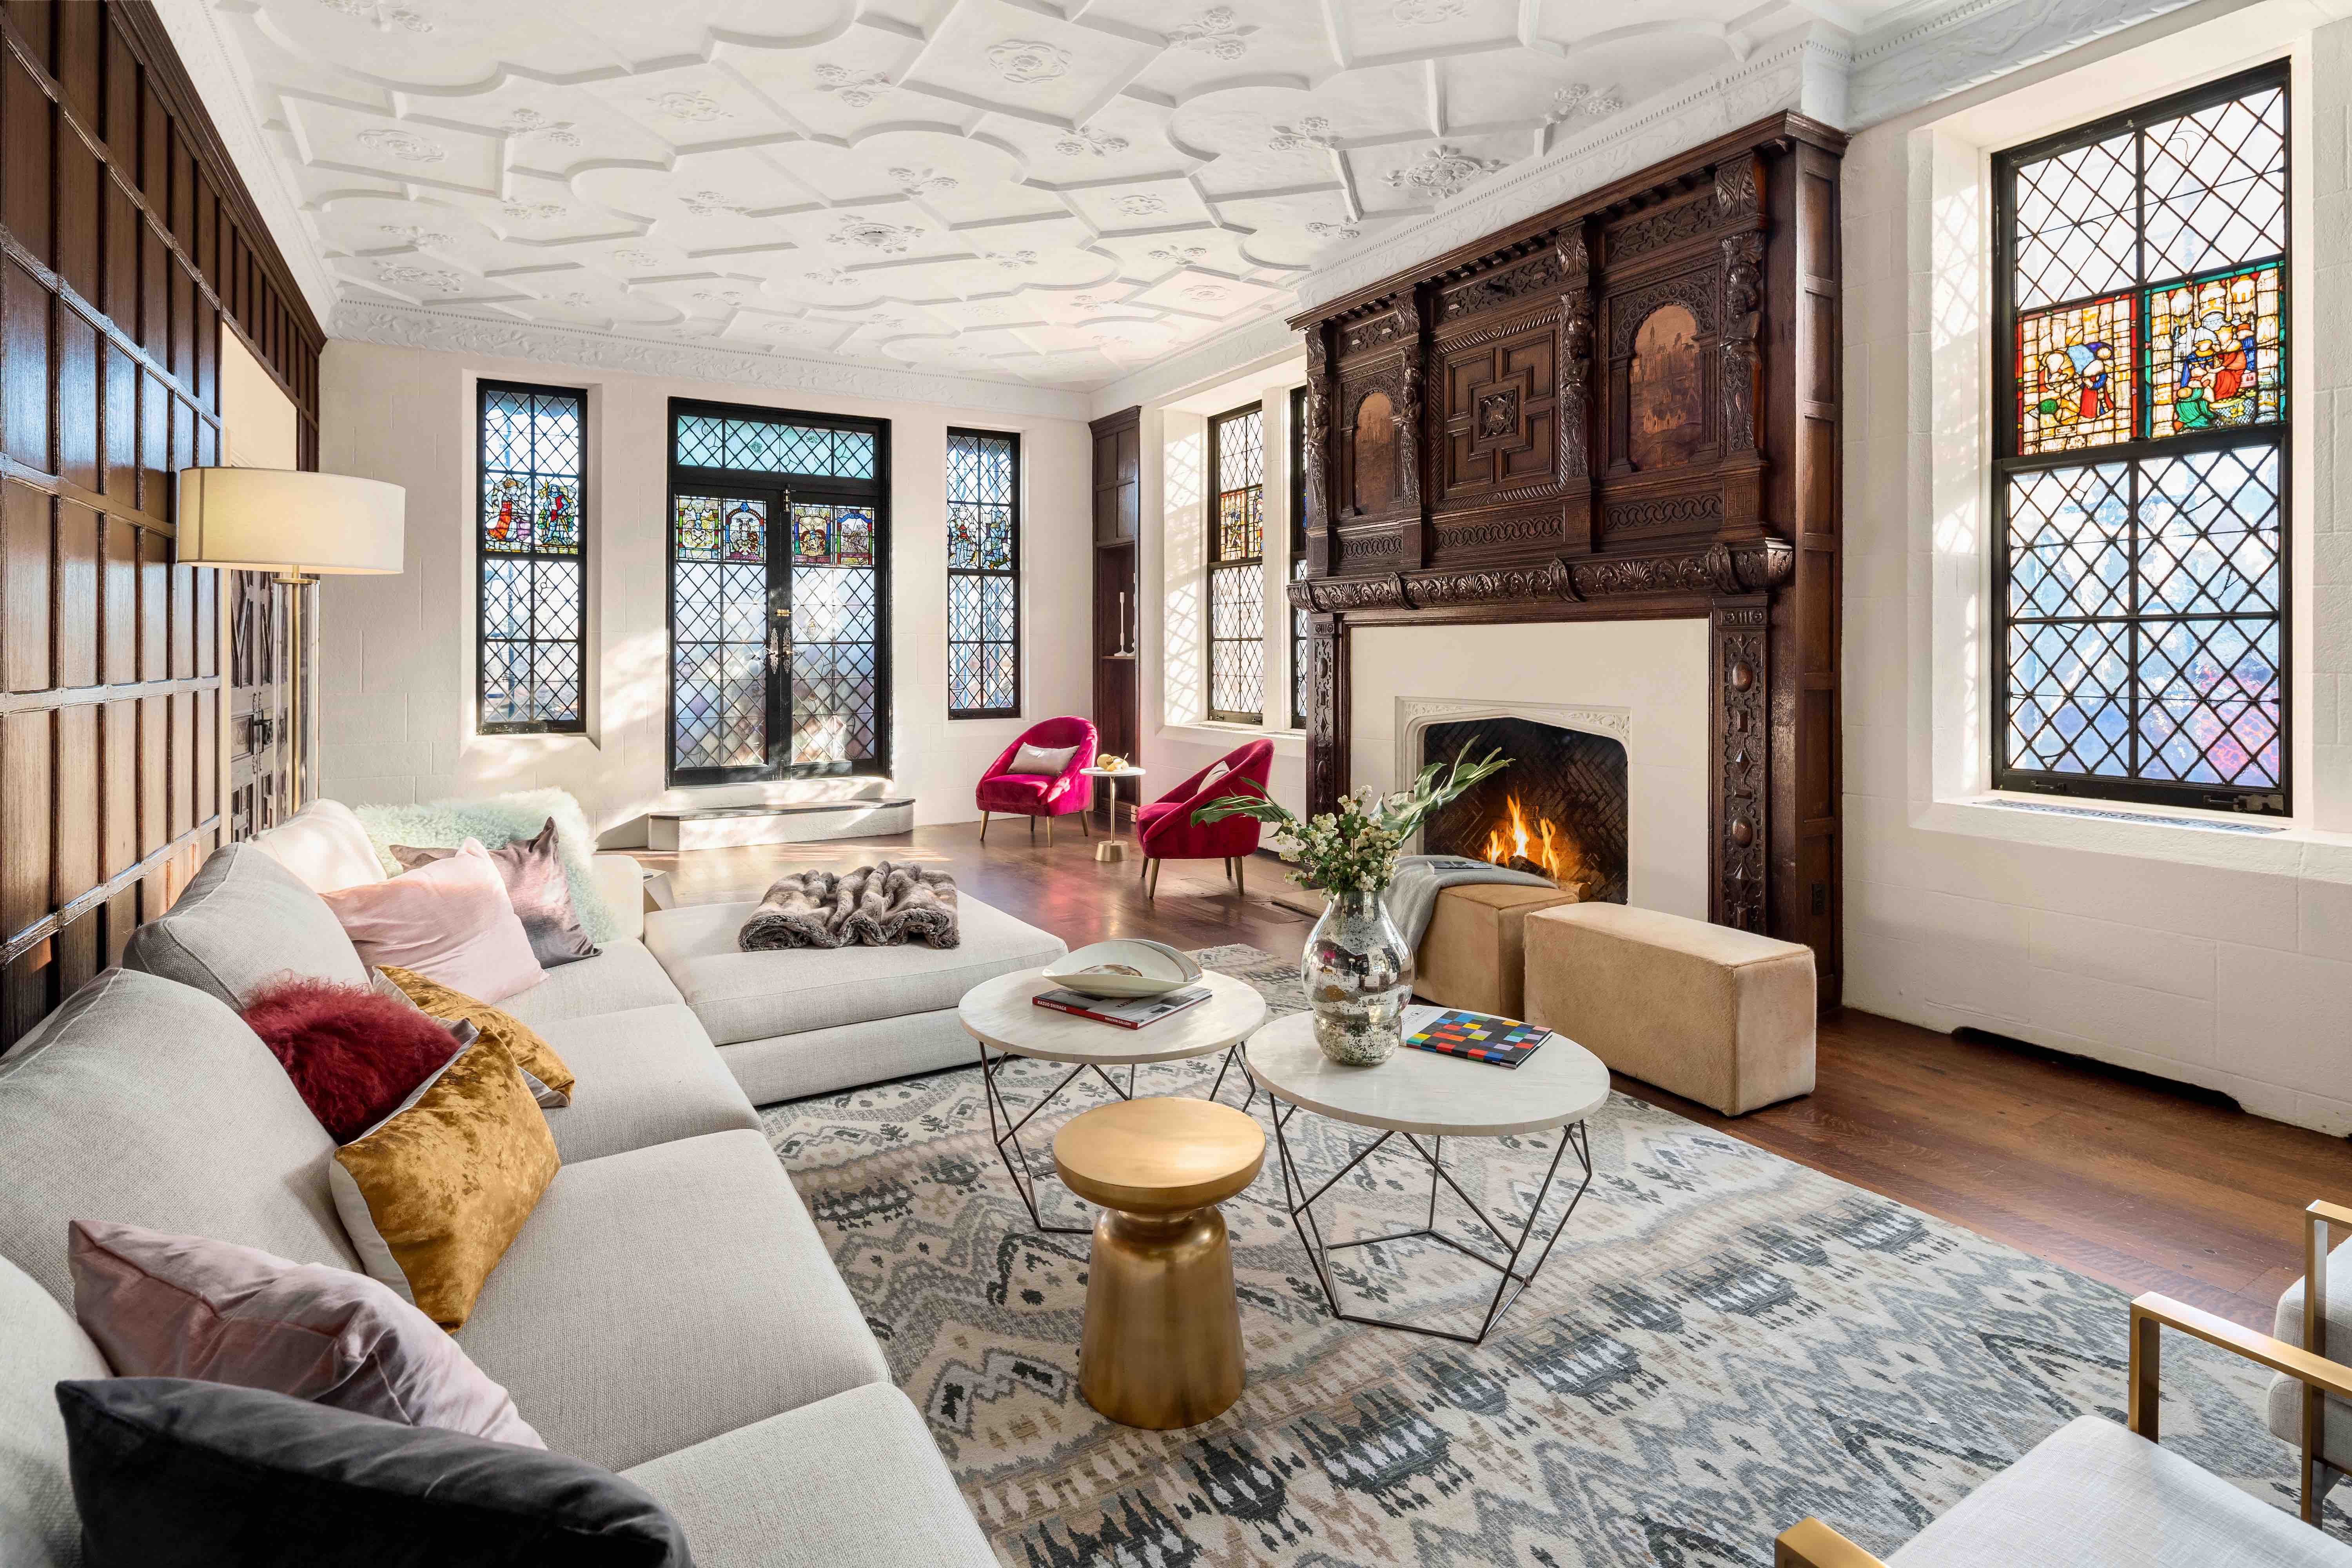 A look inside Giorgio Armani's Manhattan apartment